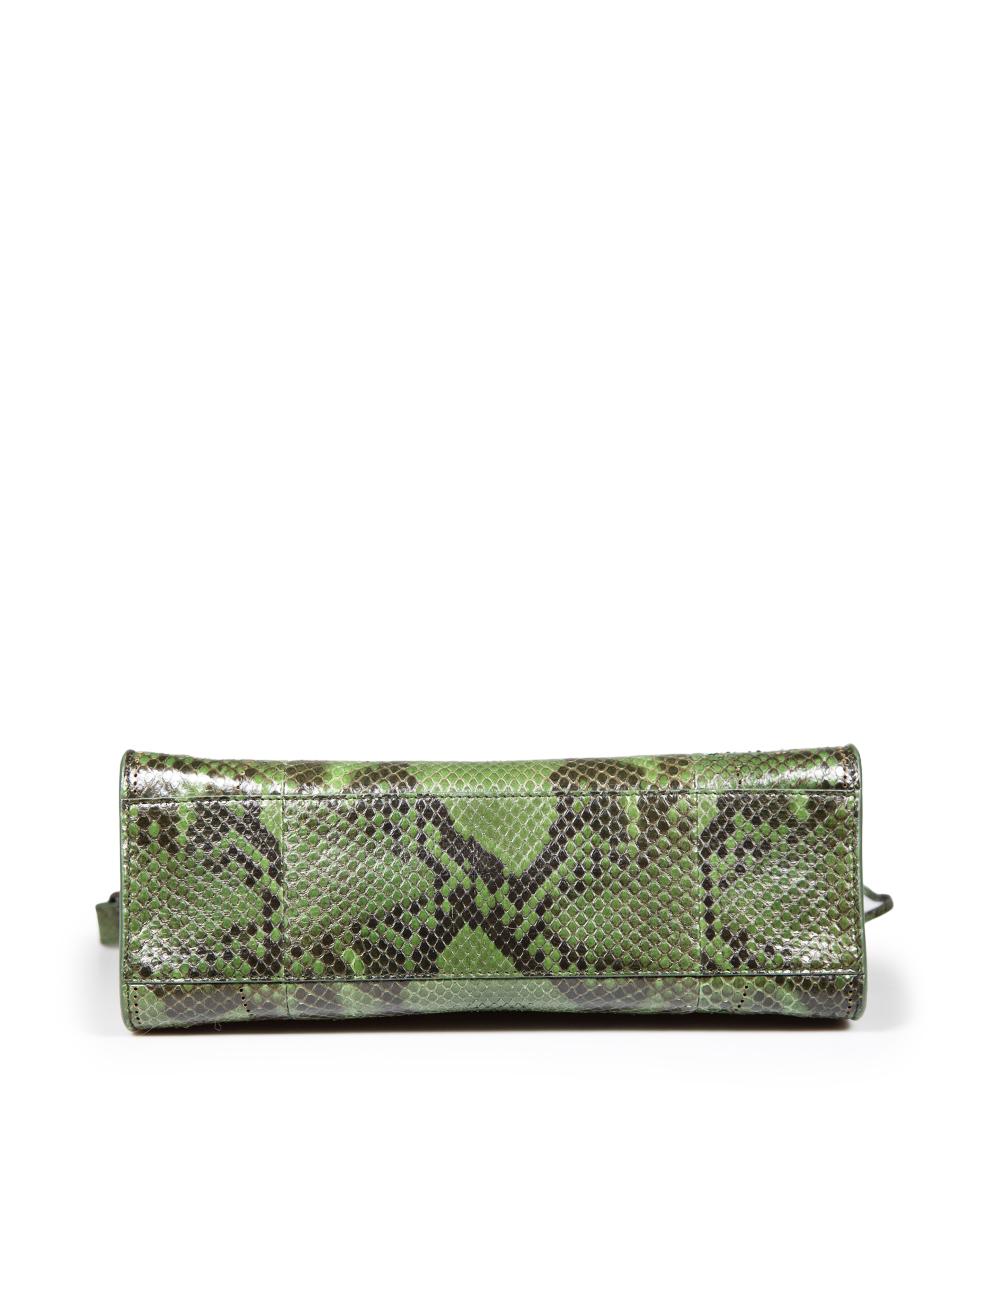 Women's Balenciaga Green Snakeskin Mini Blackout City Handbag For Sale